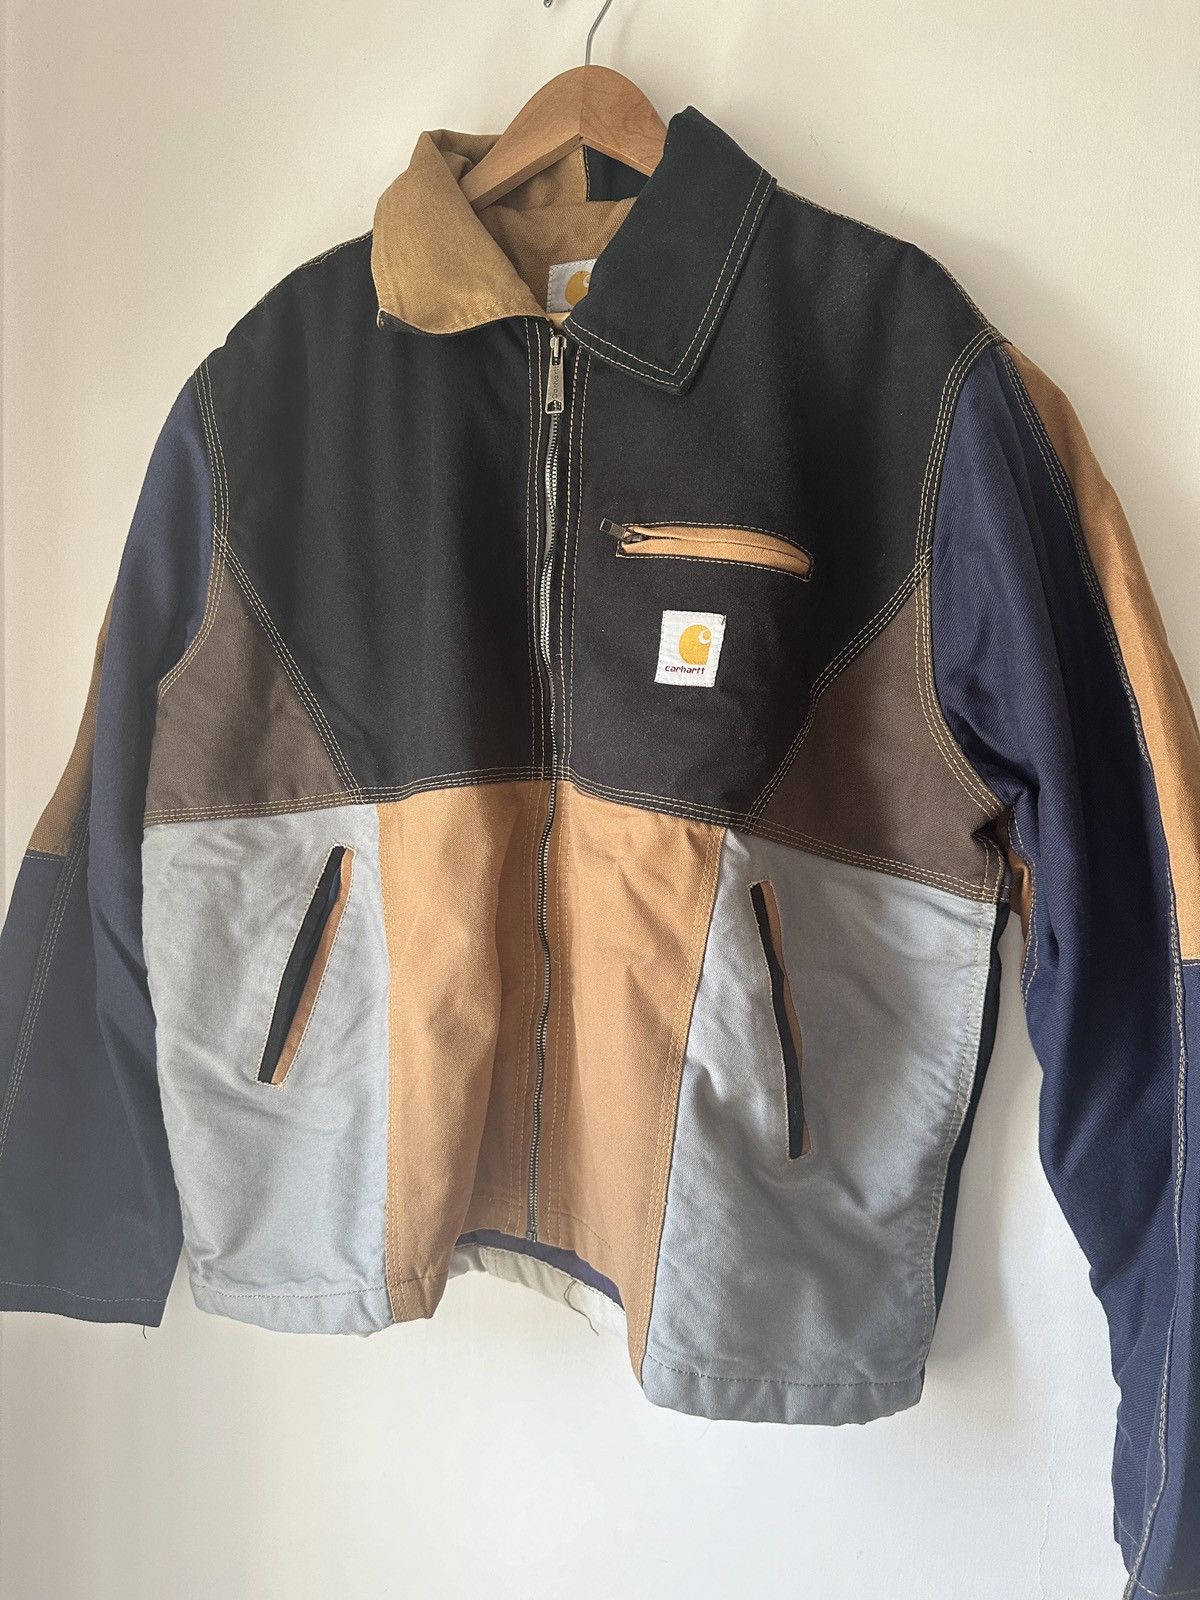 Vintage Carhartt Patchwork Workwear Jacket Size XL - 1